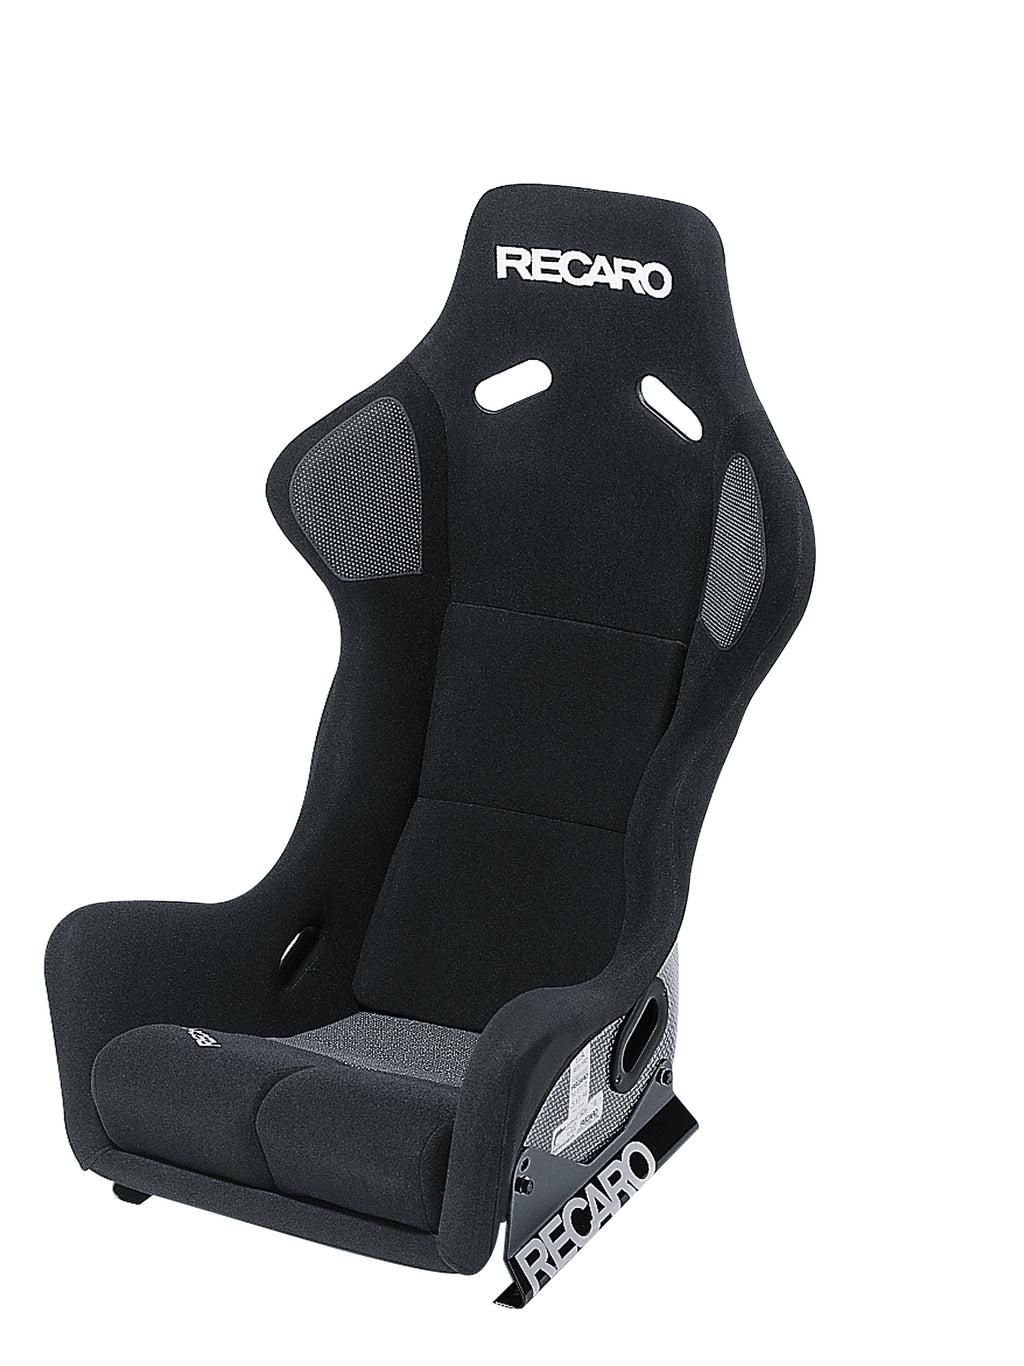 RECARO Profi SPG Racing Seat